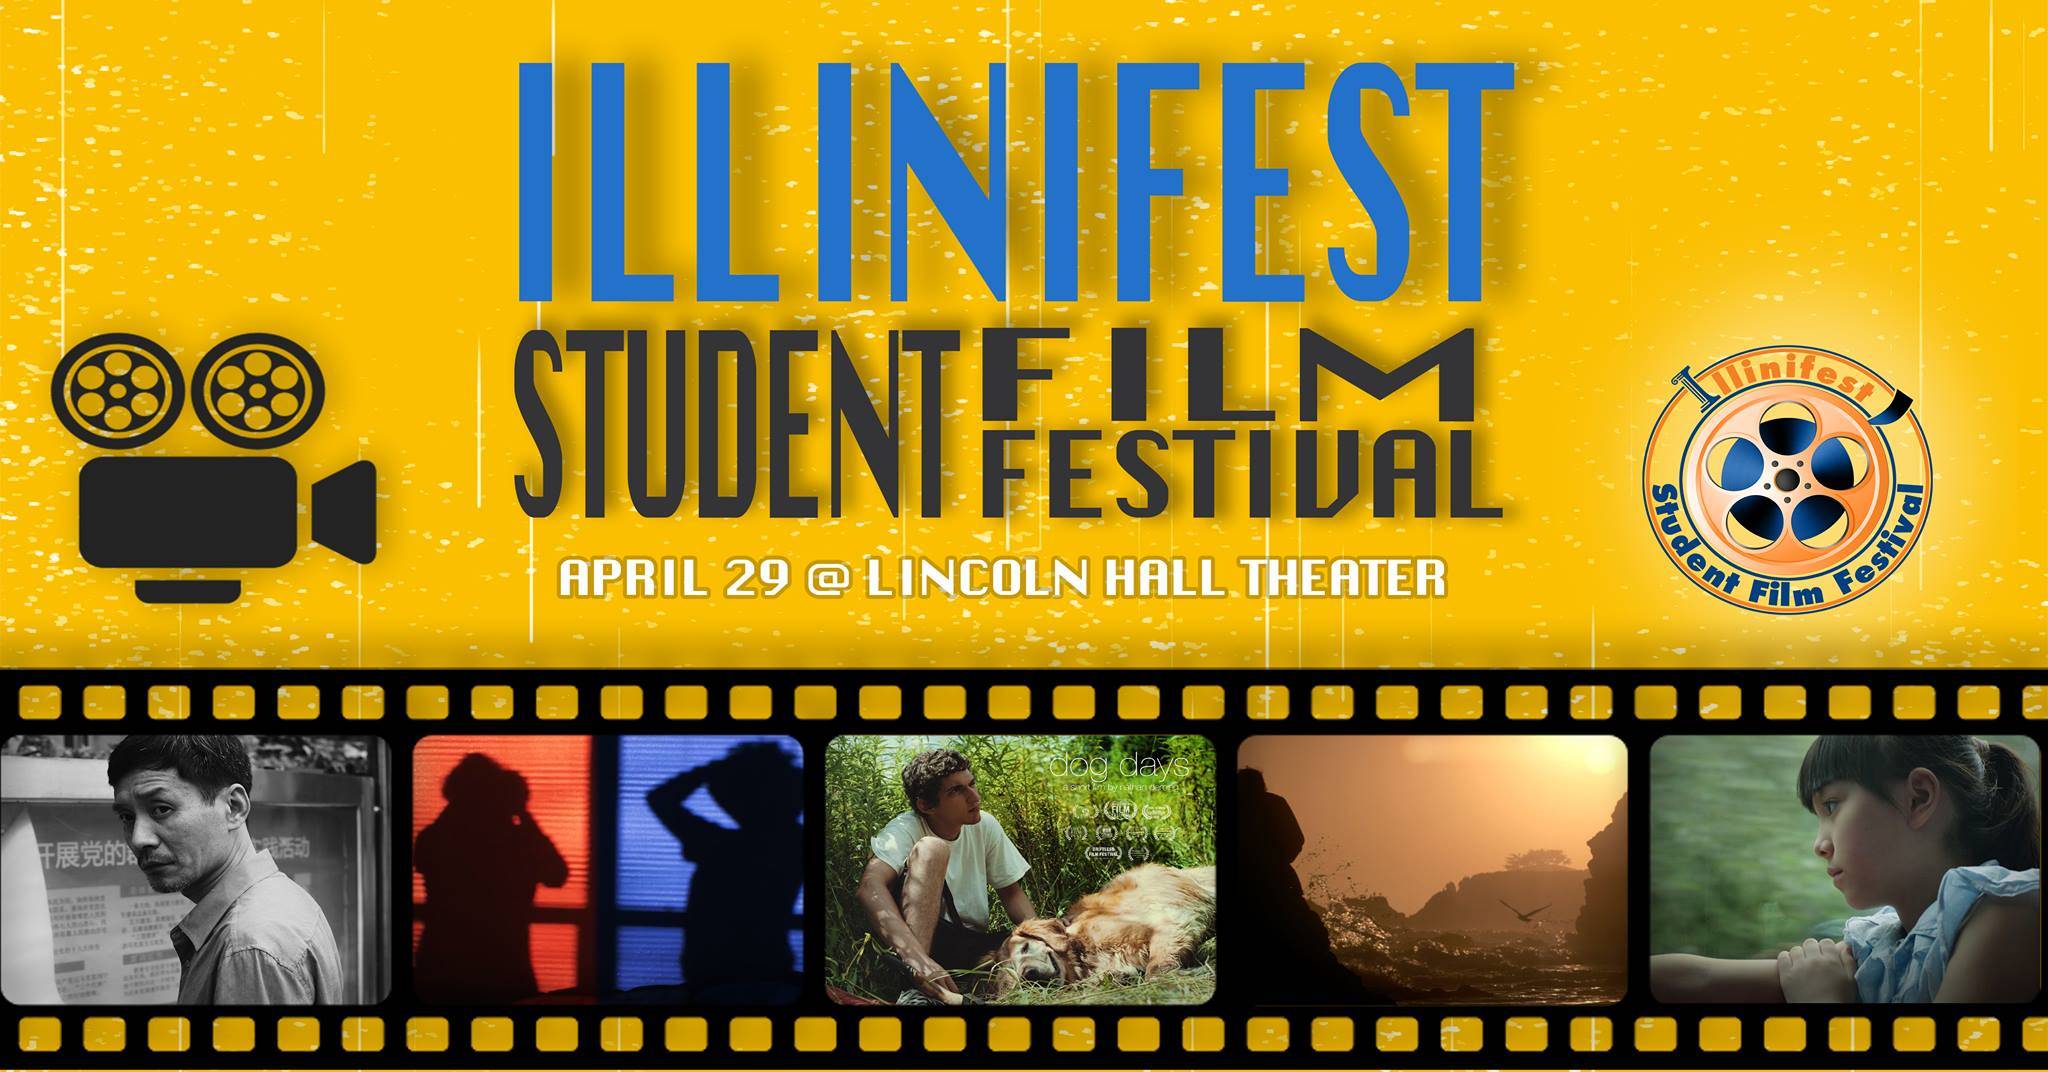 Illinifest Student Film Festival to take place April 29th